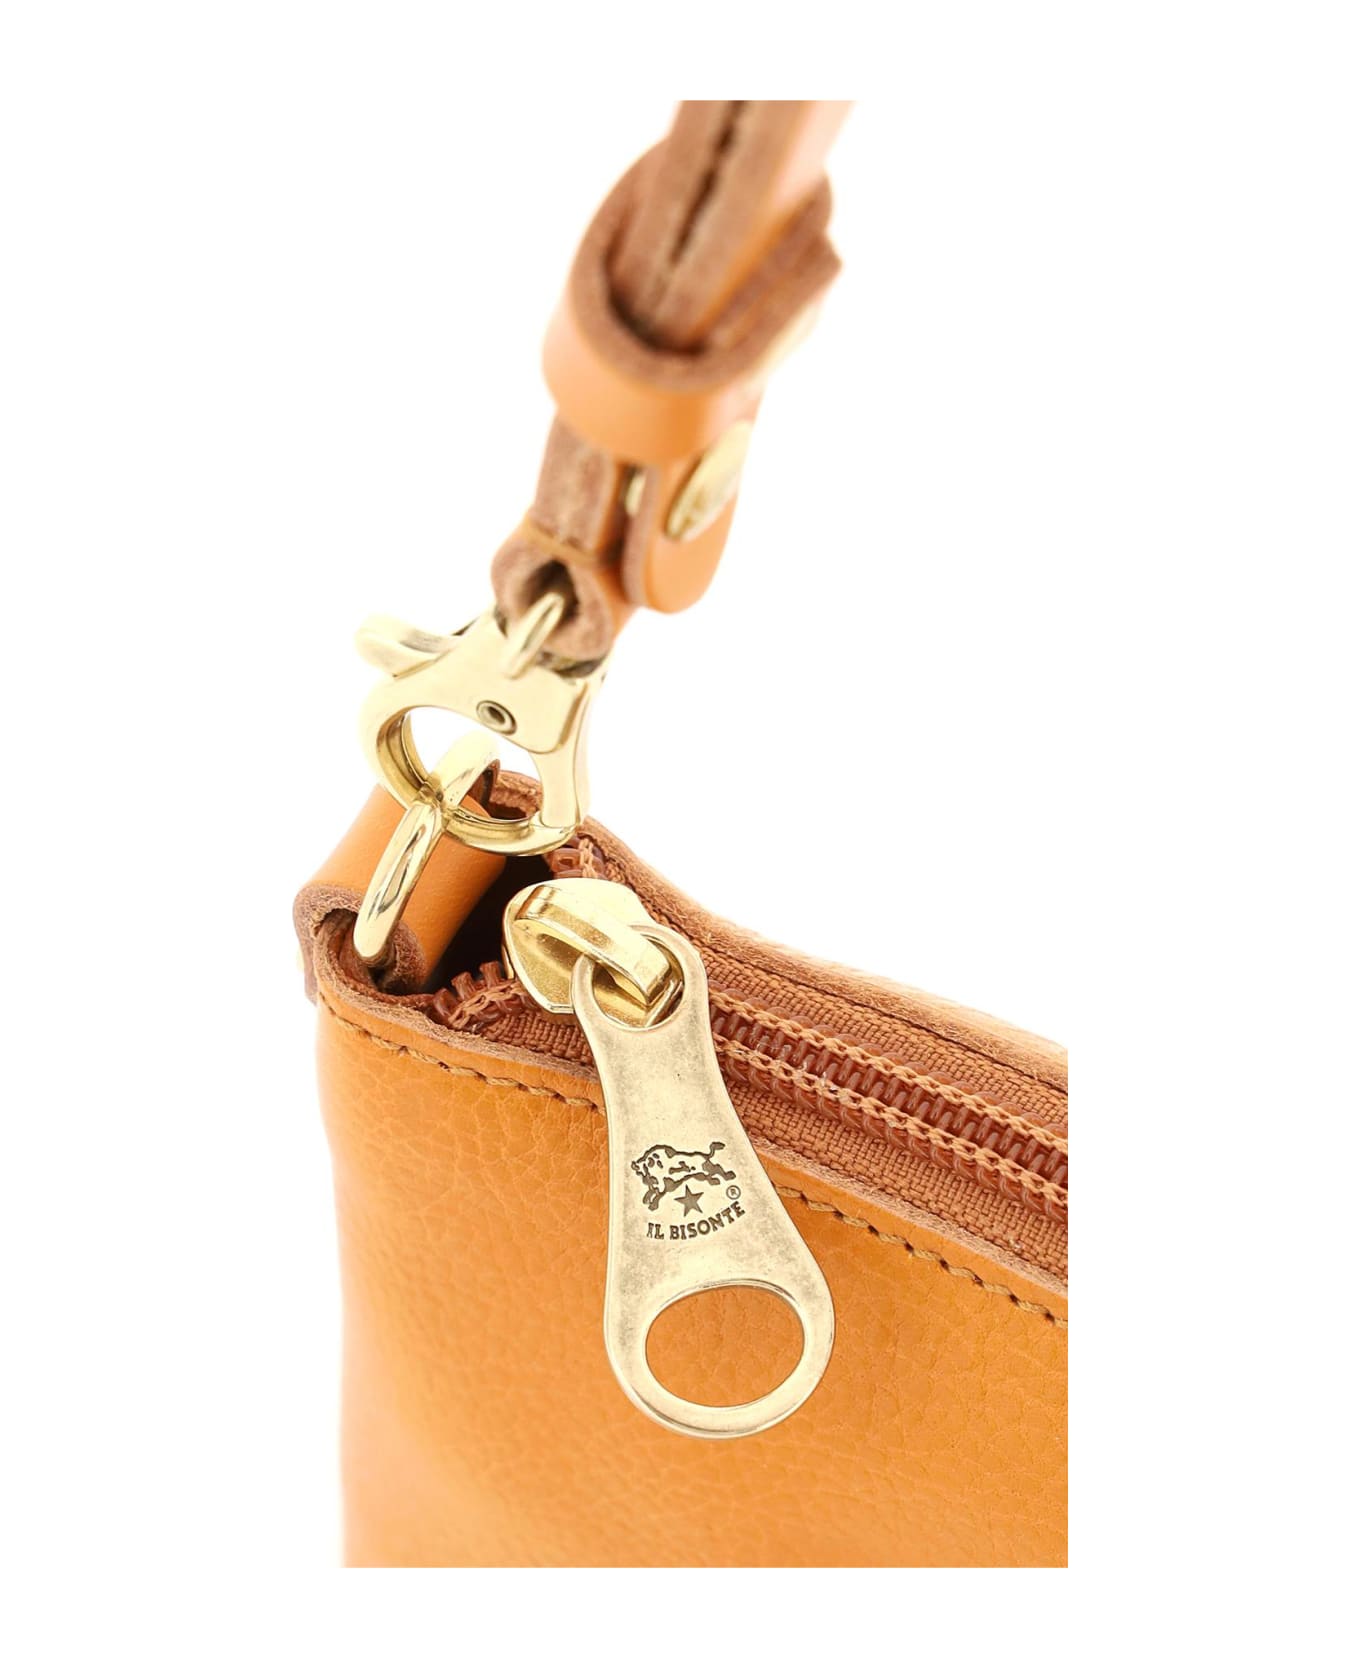 Il Bisonte 'lucia' Leather Shoulder Bag - MIELE (Orange)